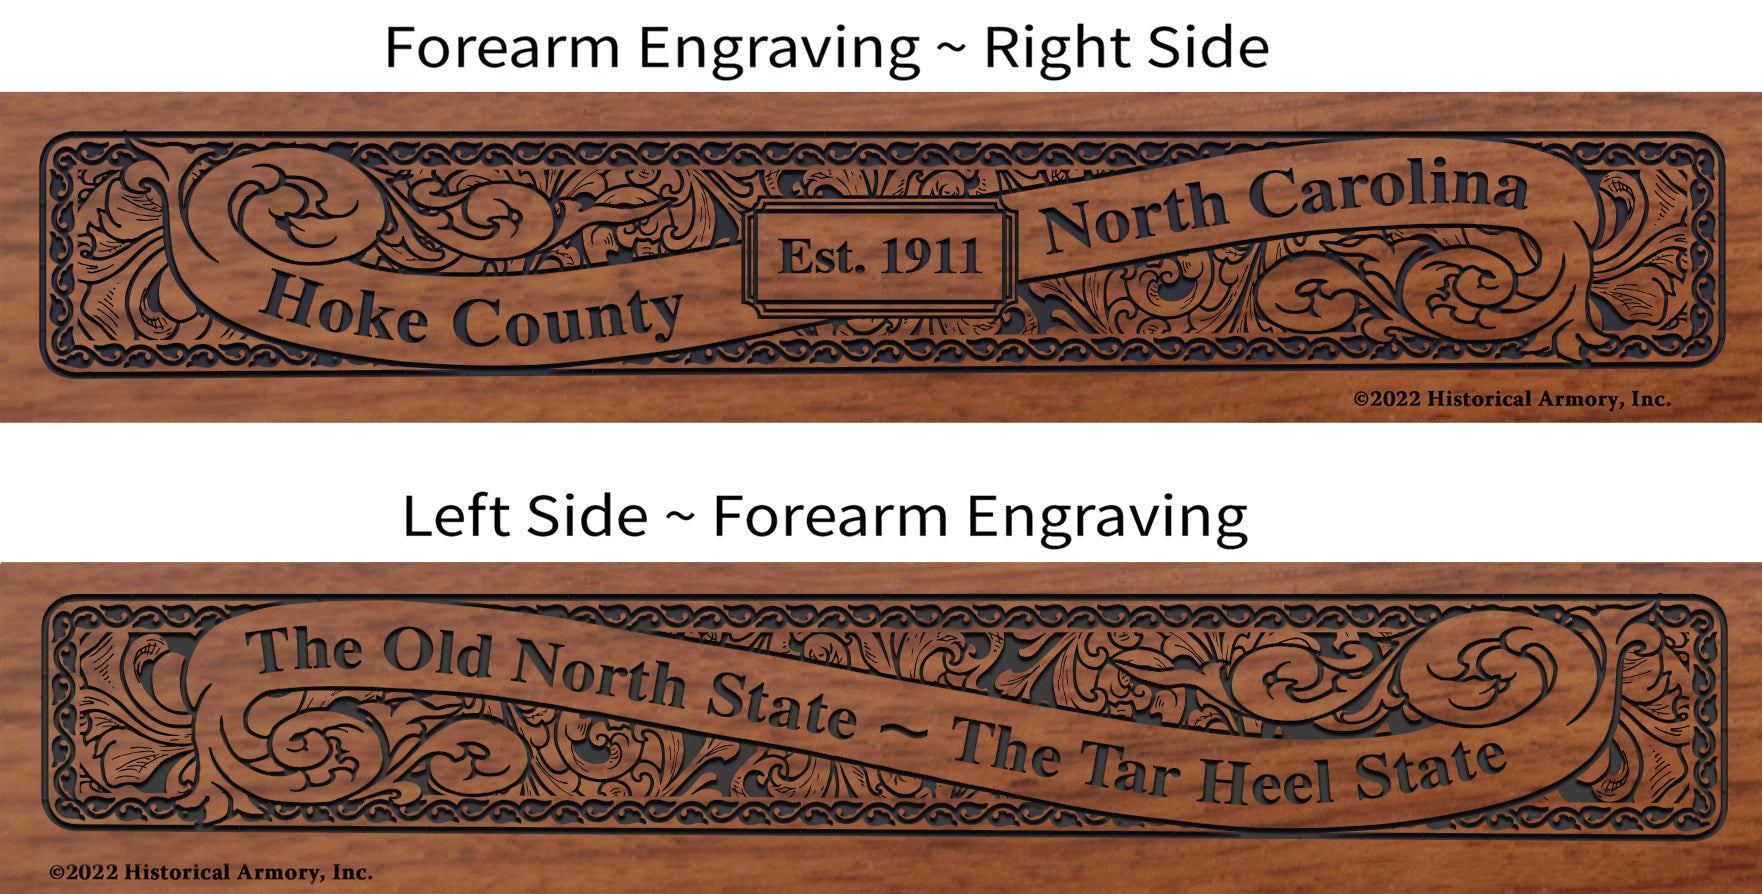 Hoke County North Carolina Engraved Rifle Forearm